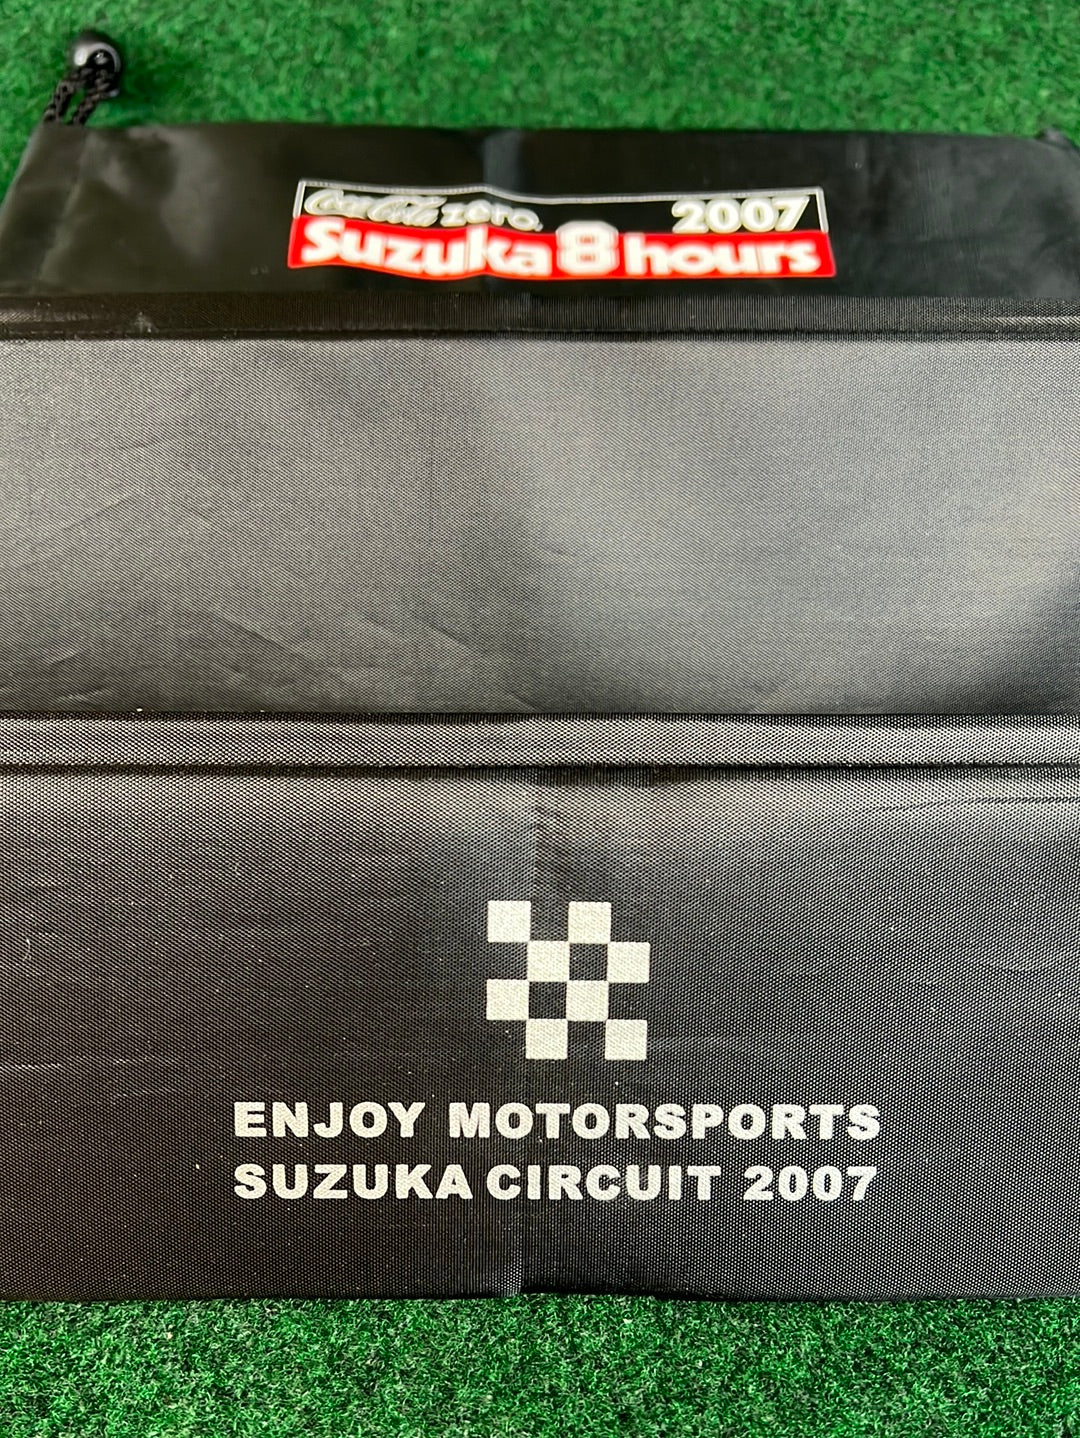 Suzuka Circuit 2007 Suzuka 8 Hours Motorcycle Race Seat Cushion and Bag